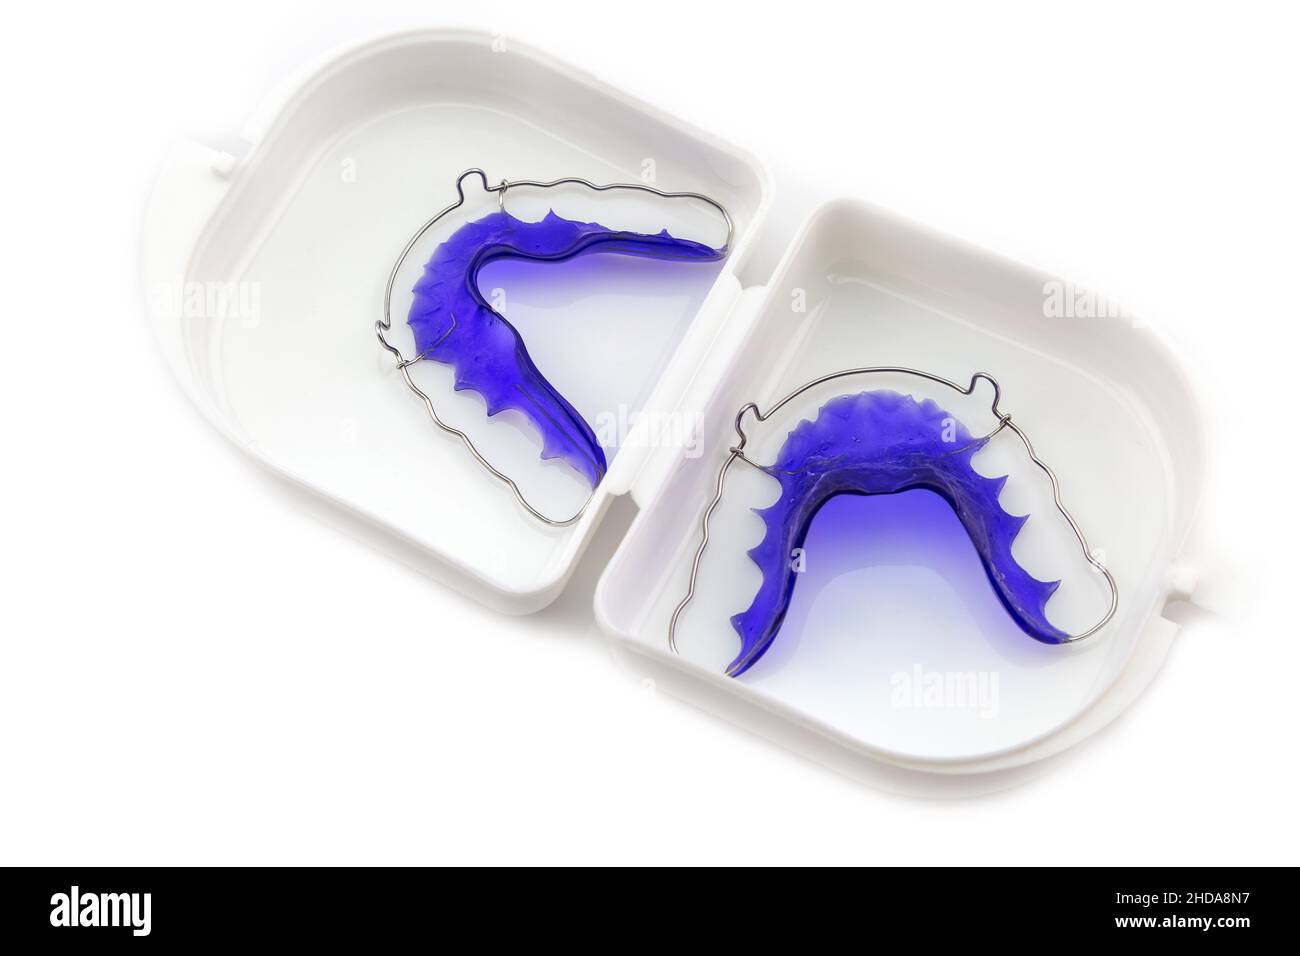 Blue Acrylic dental retainer isolated in white box on white background Stock Photo